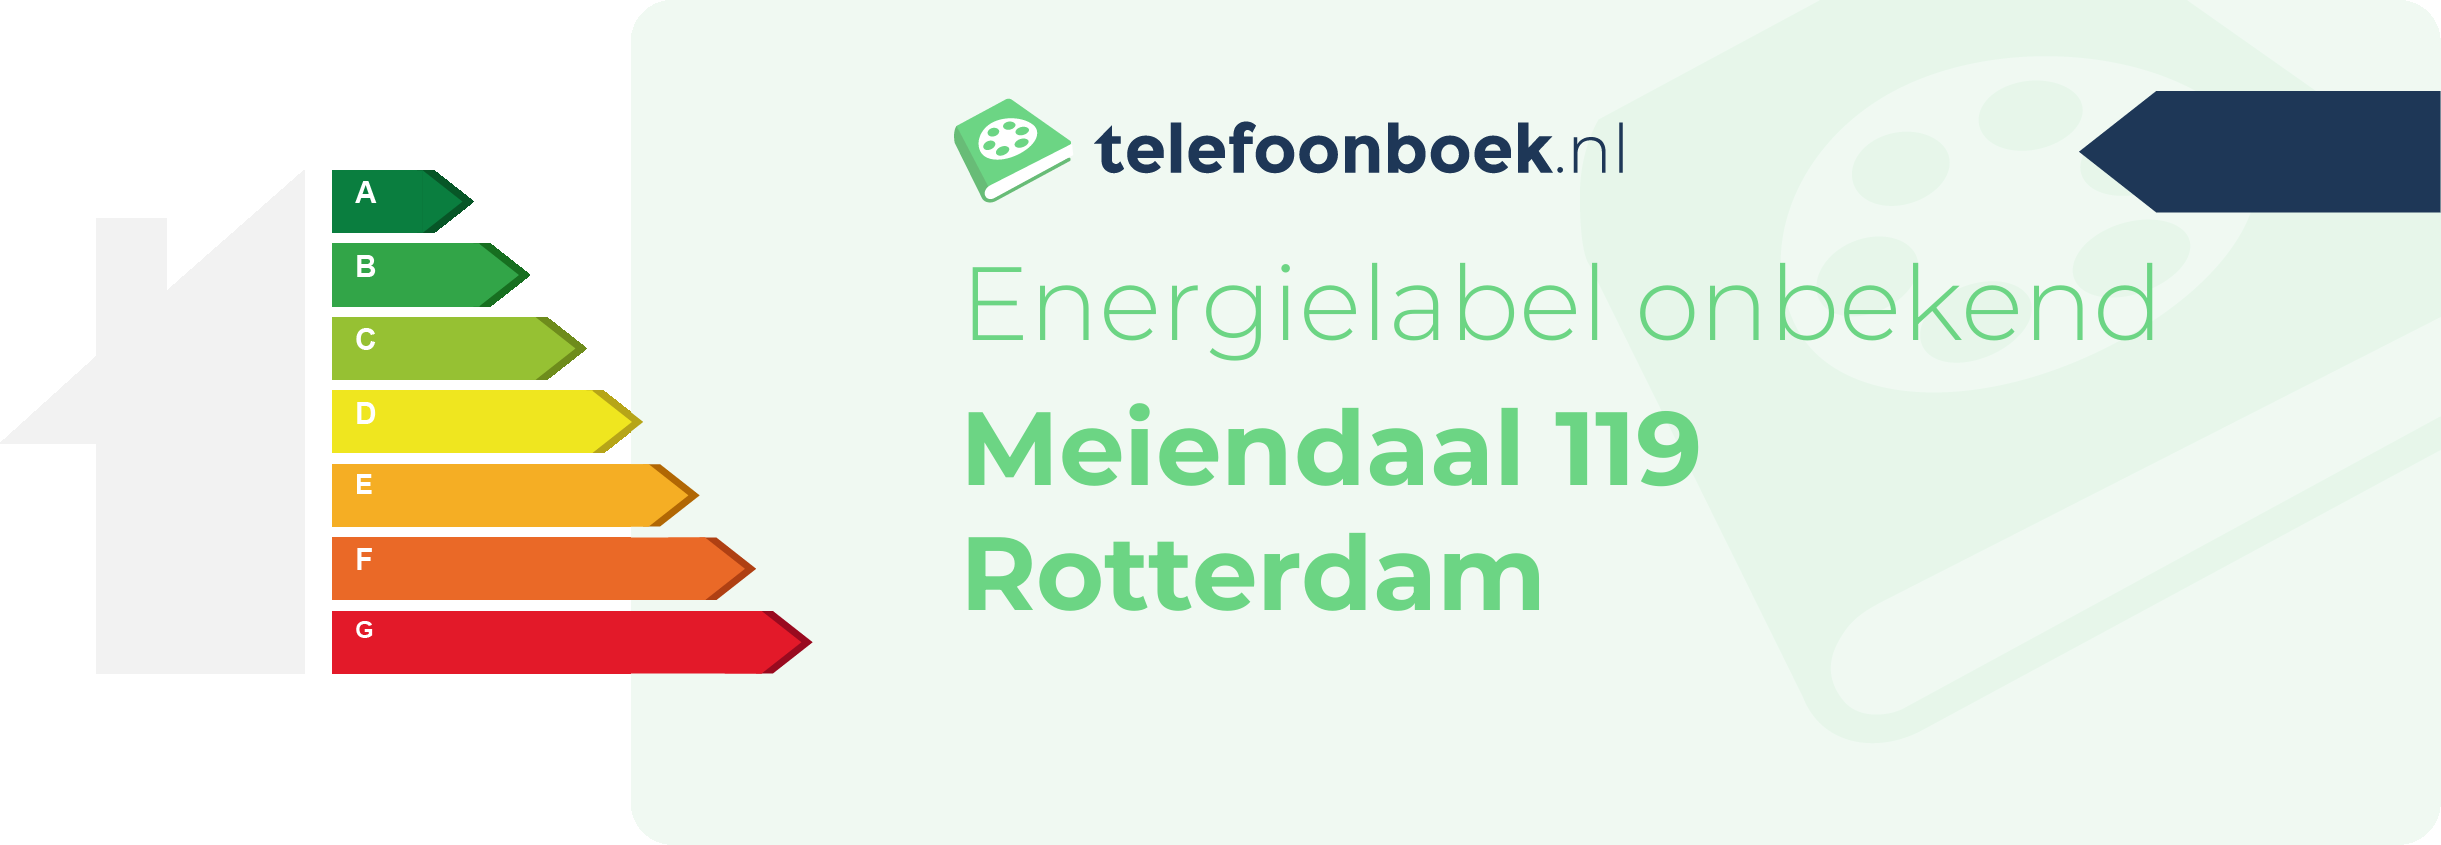 Energielabel Meiendaal 119 Rotterdam